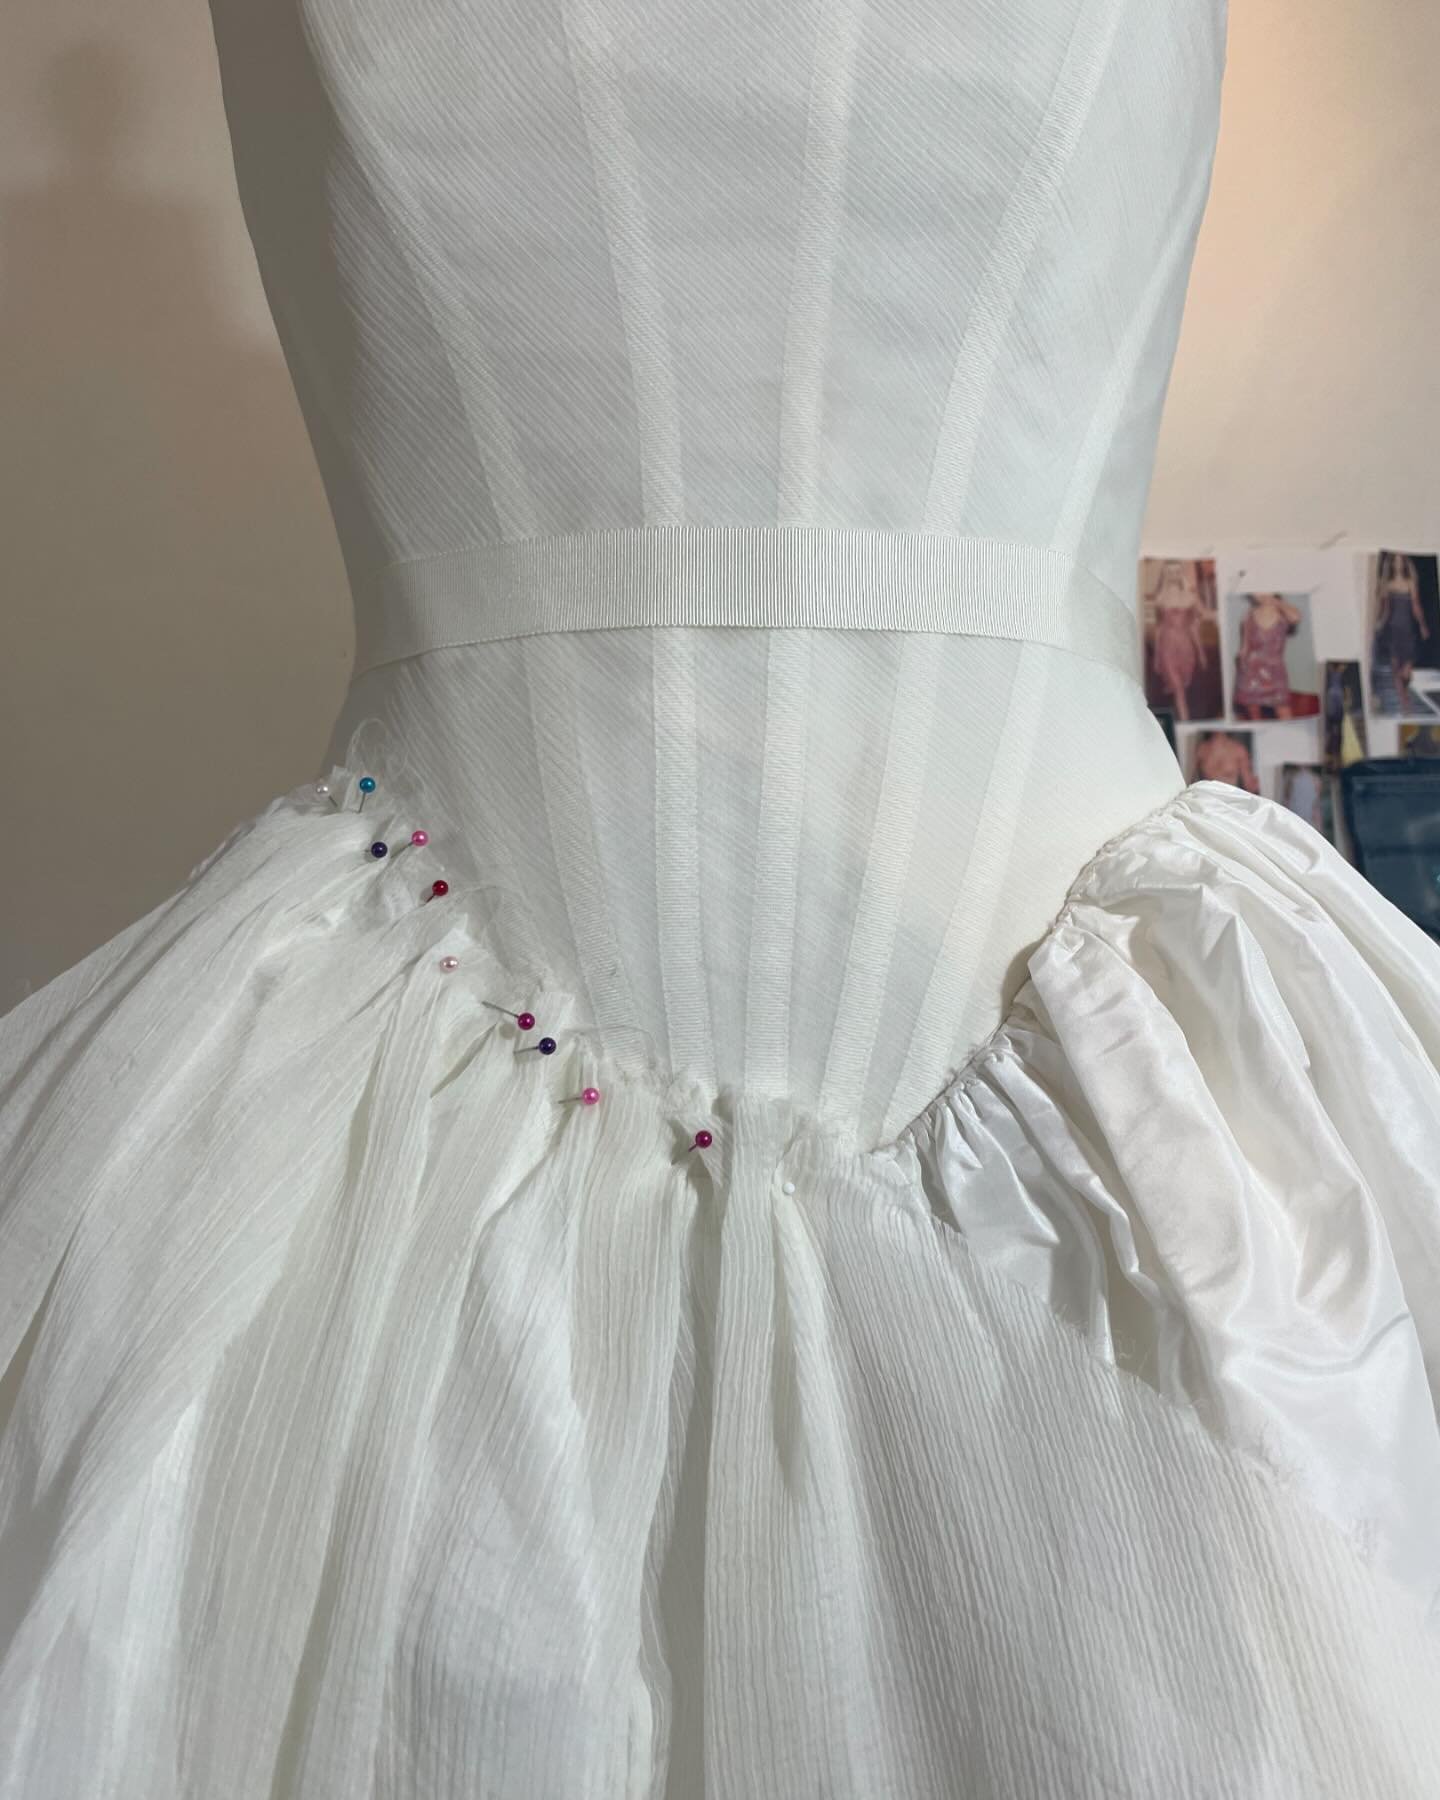 Bridal Process: gown construction